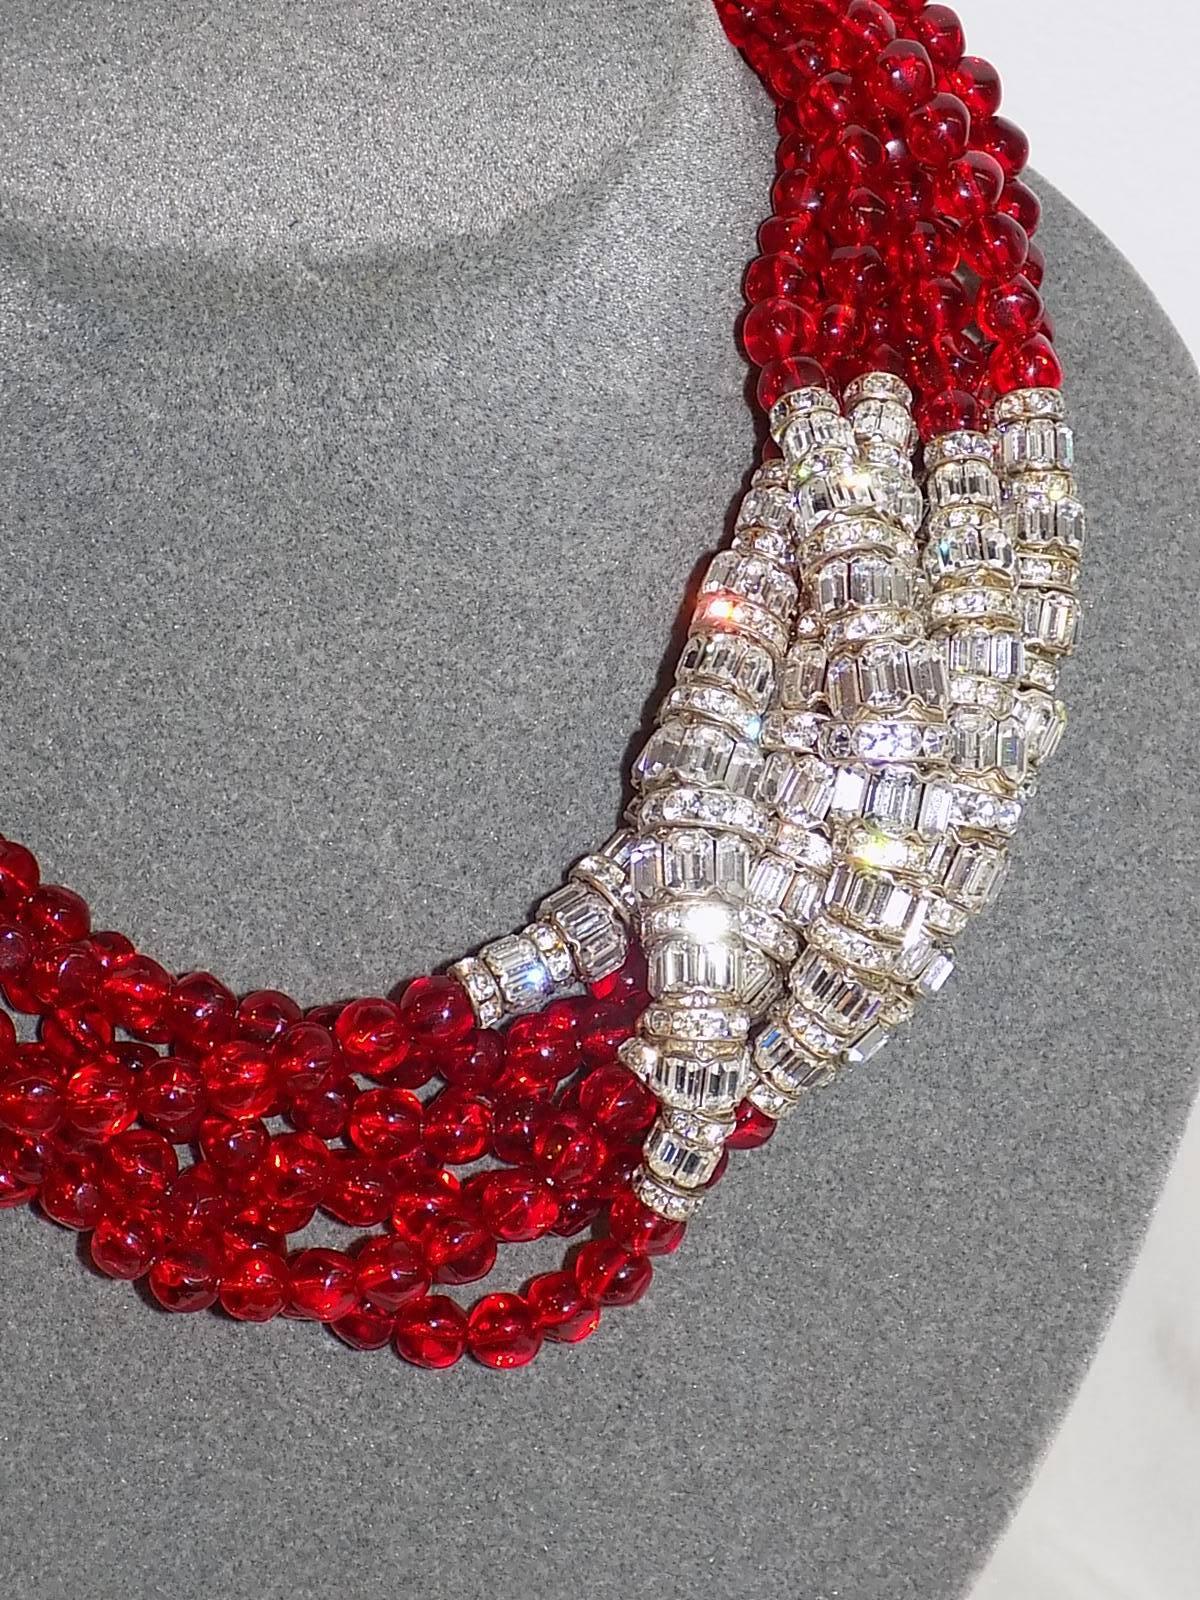 glass bead necklace ideas